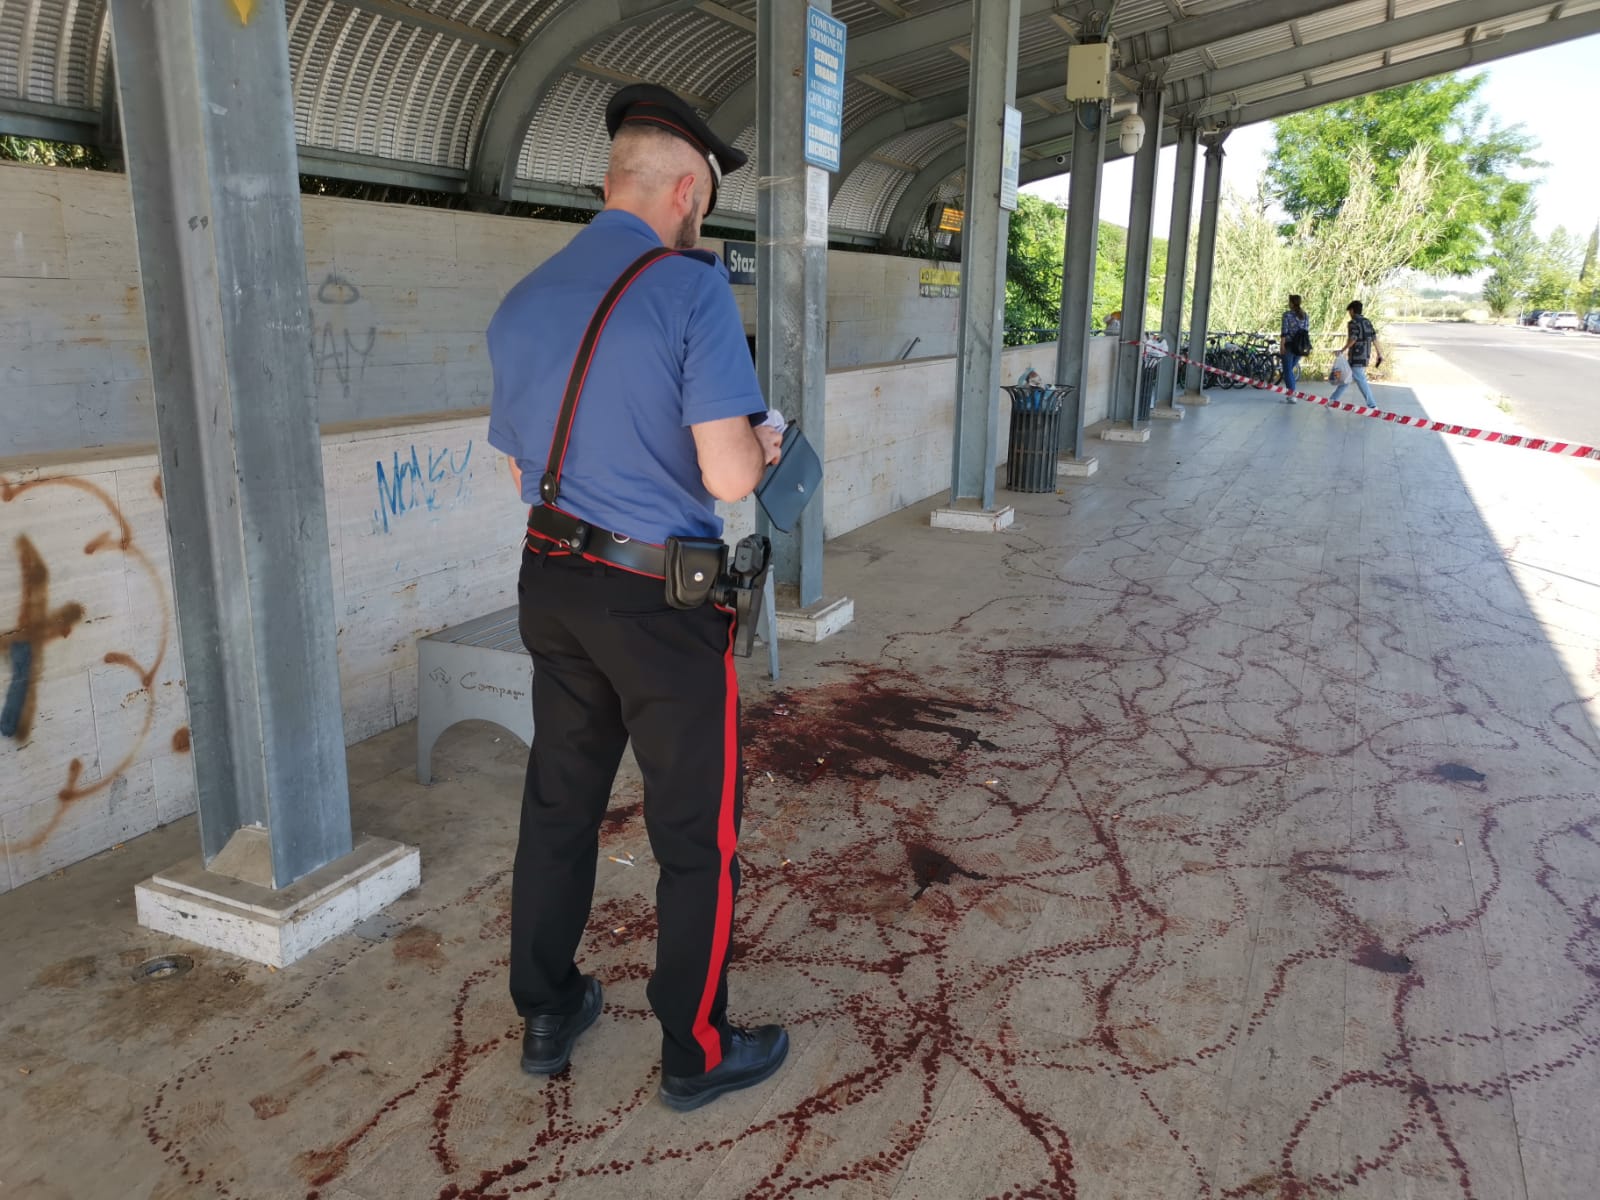 Sangue alla fermata del bus, intervento dei Carabinieri